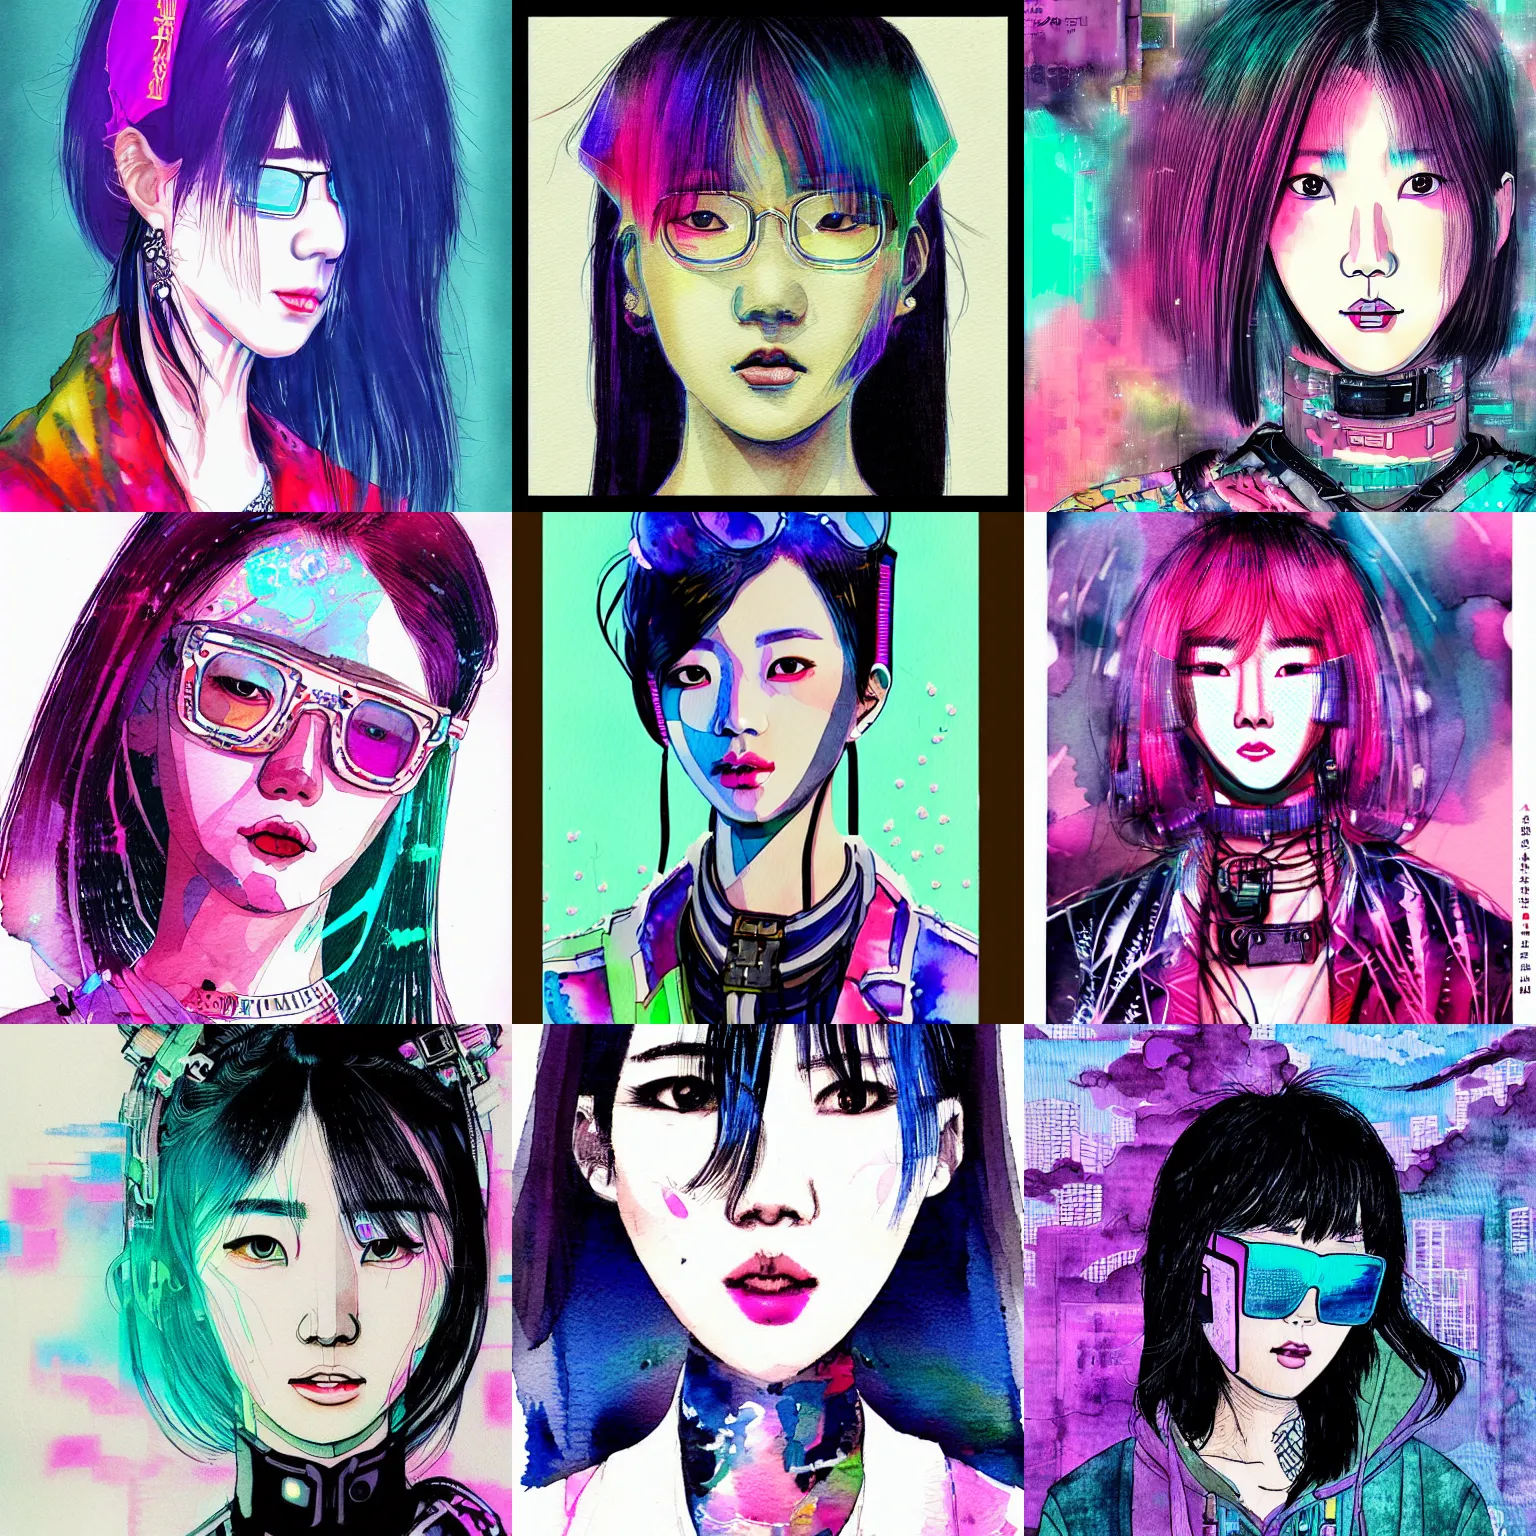 Prompt: korean women's fashion hacker, intricate watercolor cyberpunk vaporwave portrait by tim doyle